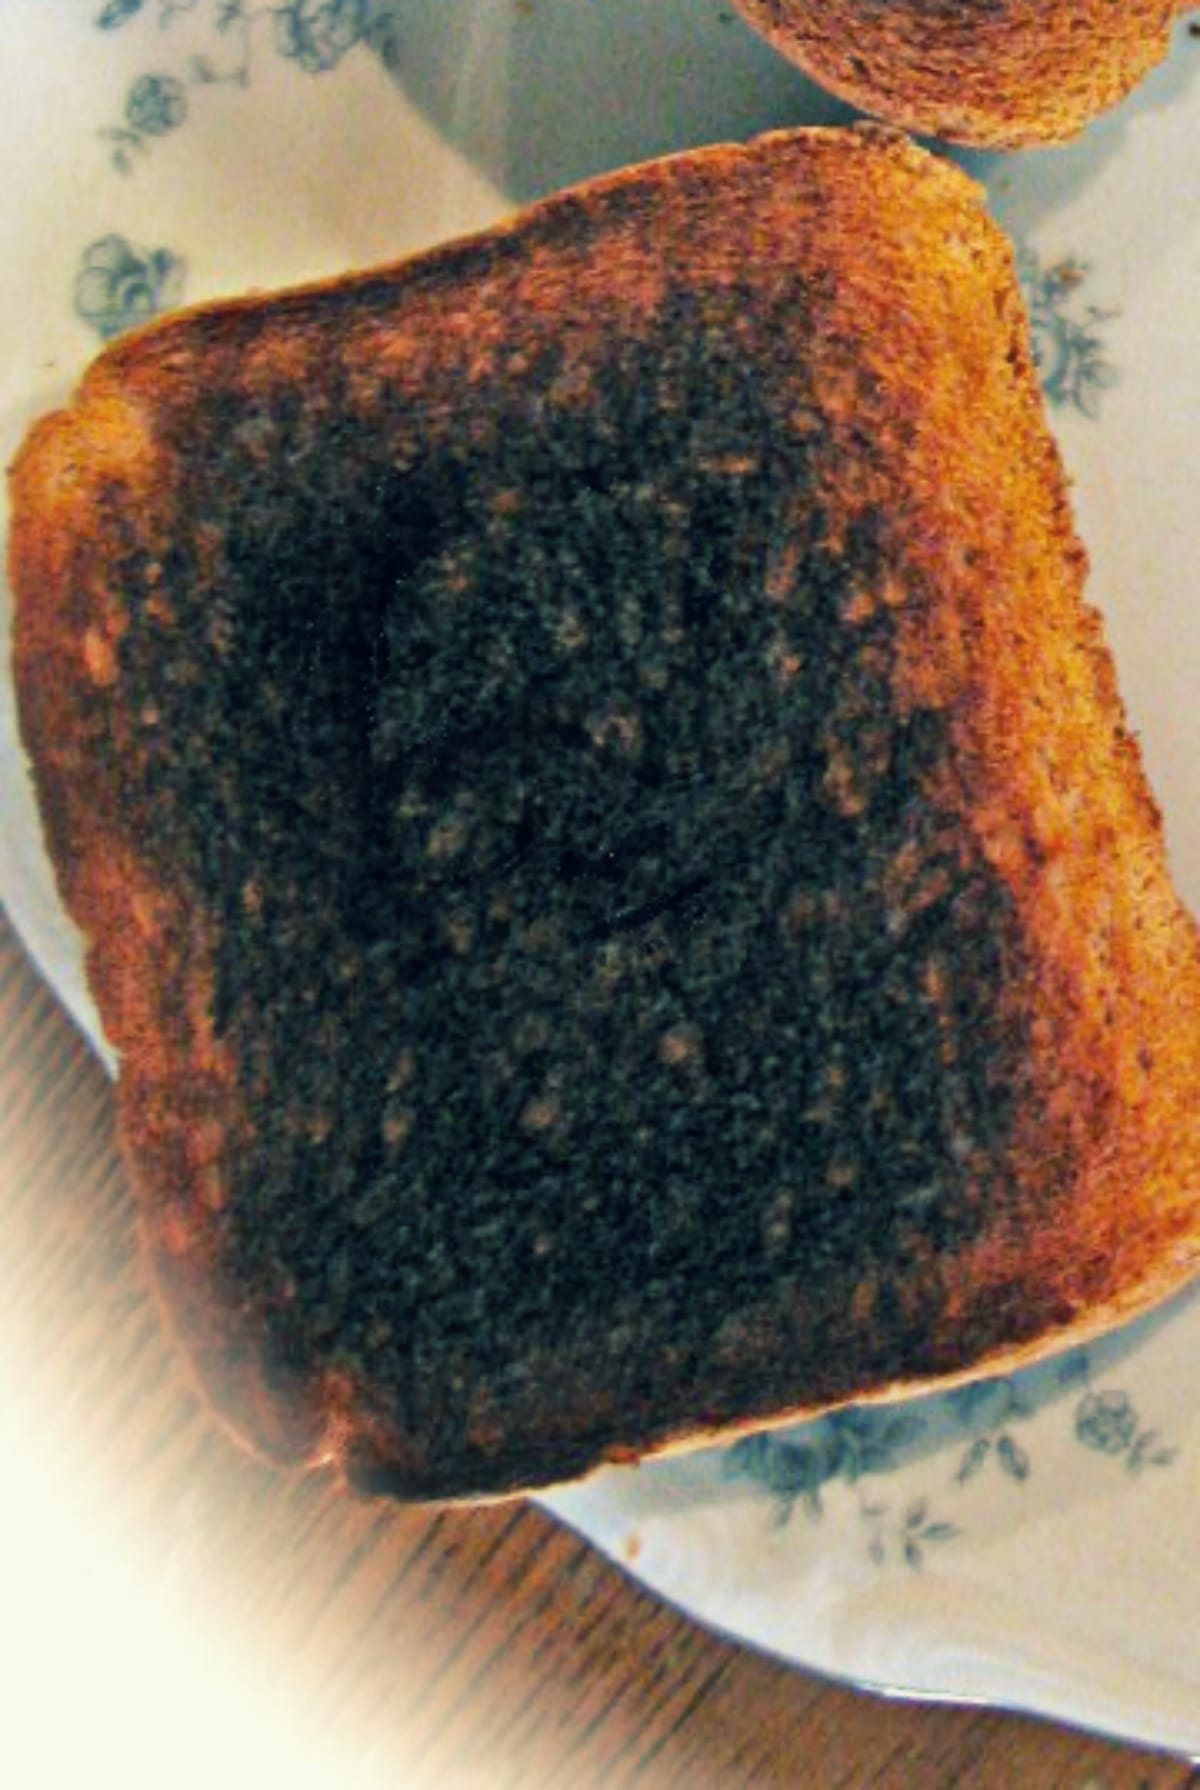 Skrillex Toast